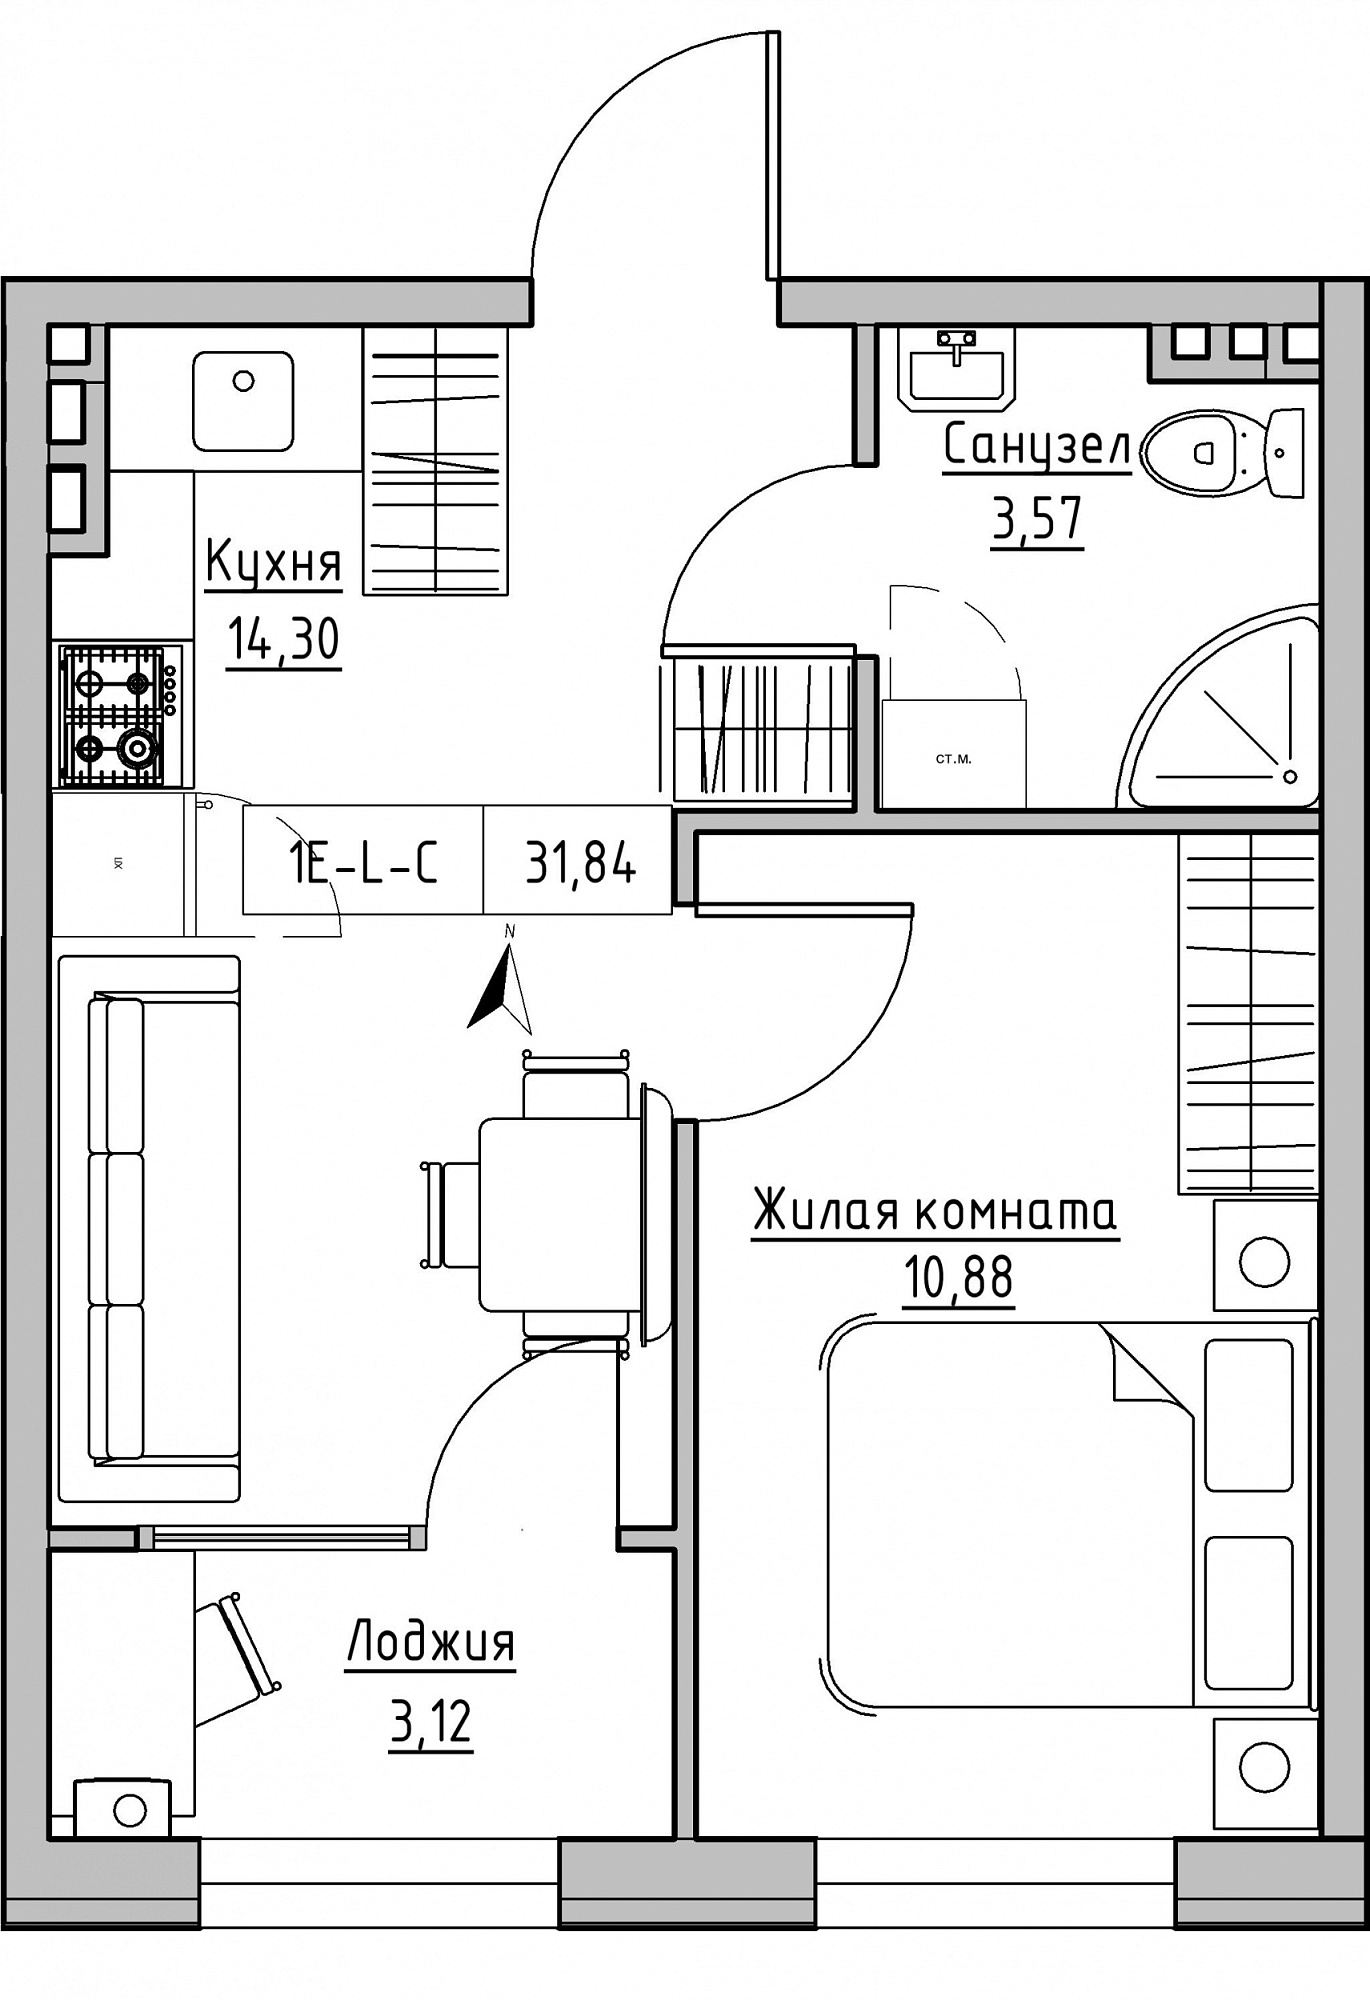 Planning 1-rm flats area 31.84m2, KS-024-02/0006.